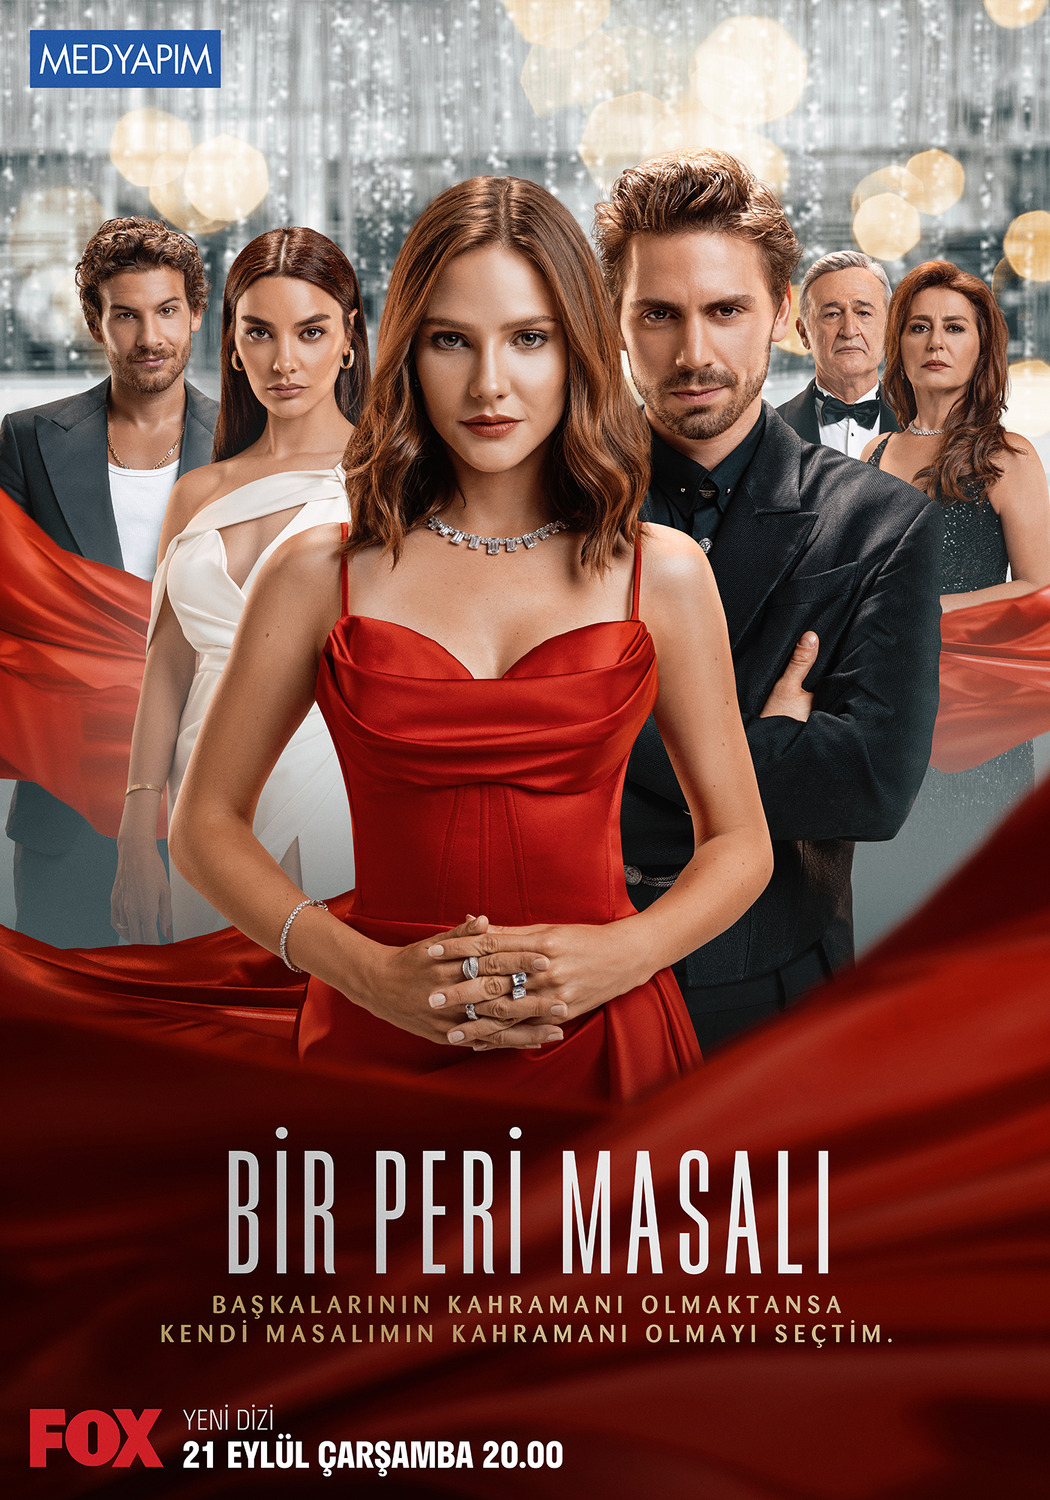 Extra Large TV Poster Image for Bir Peri Masali 